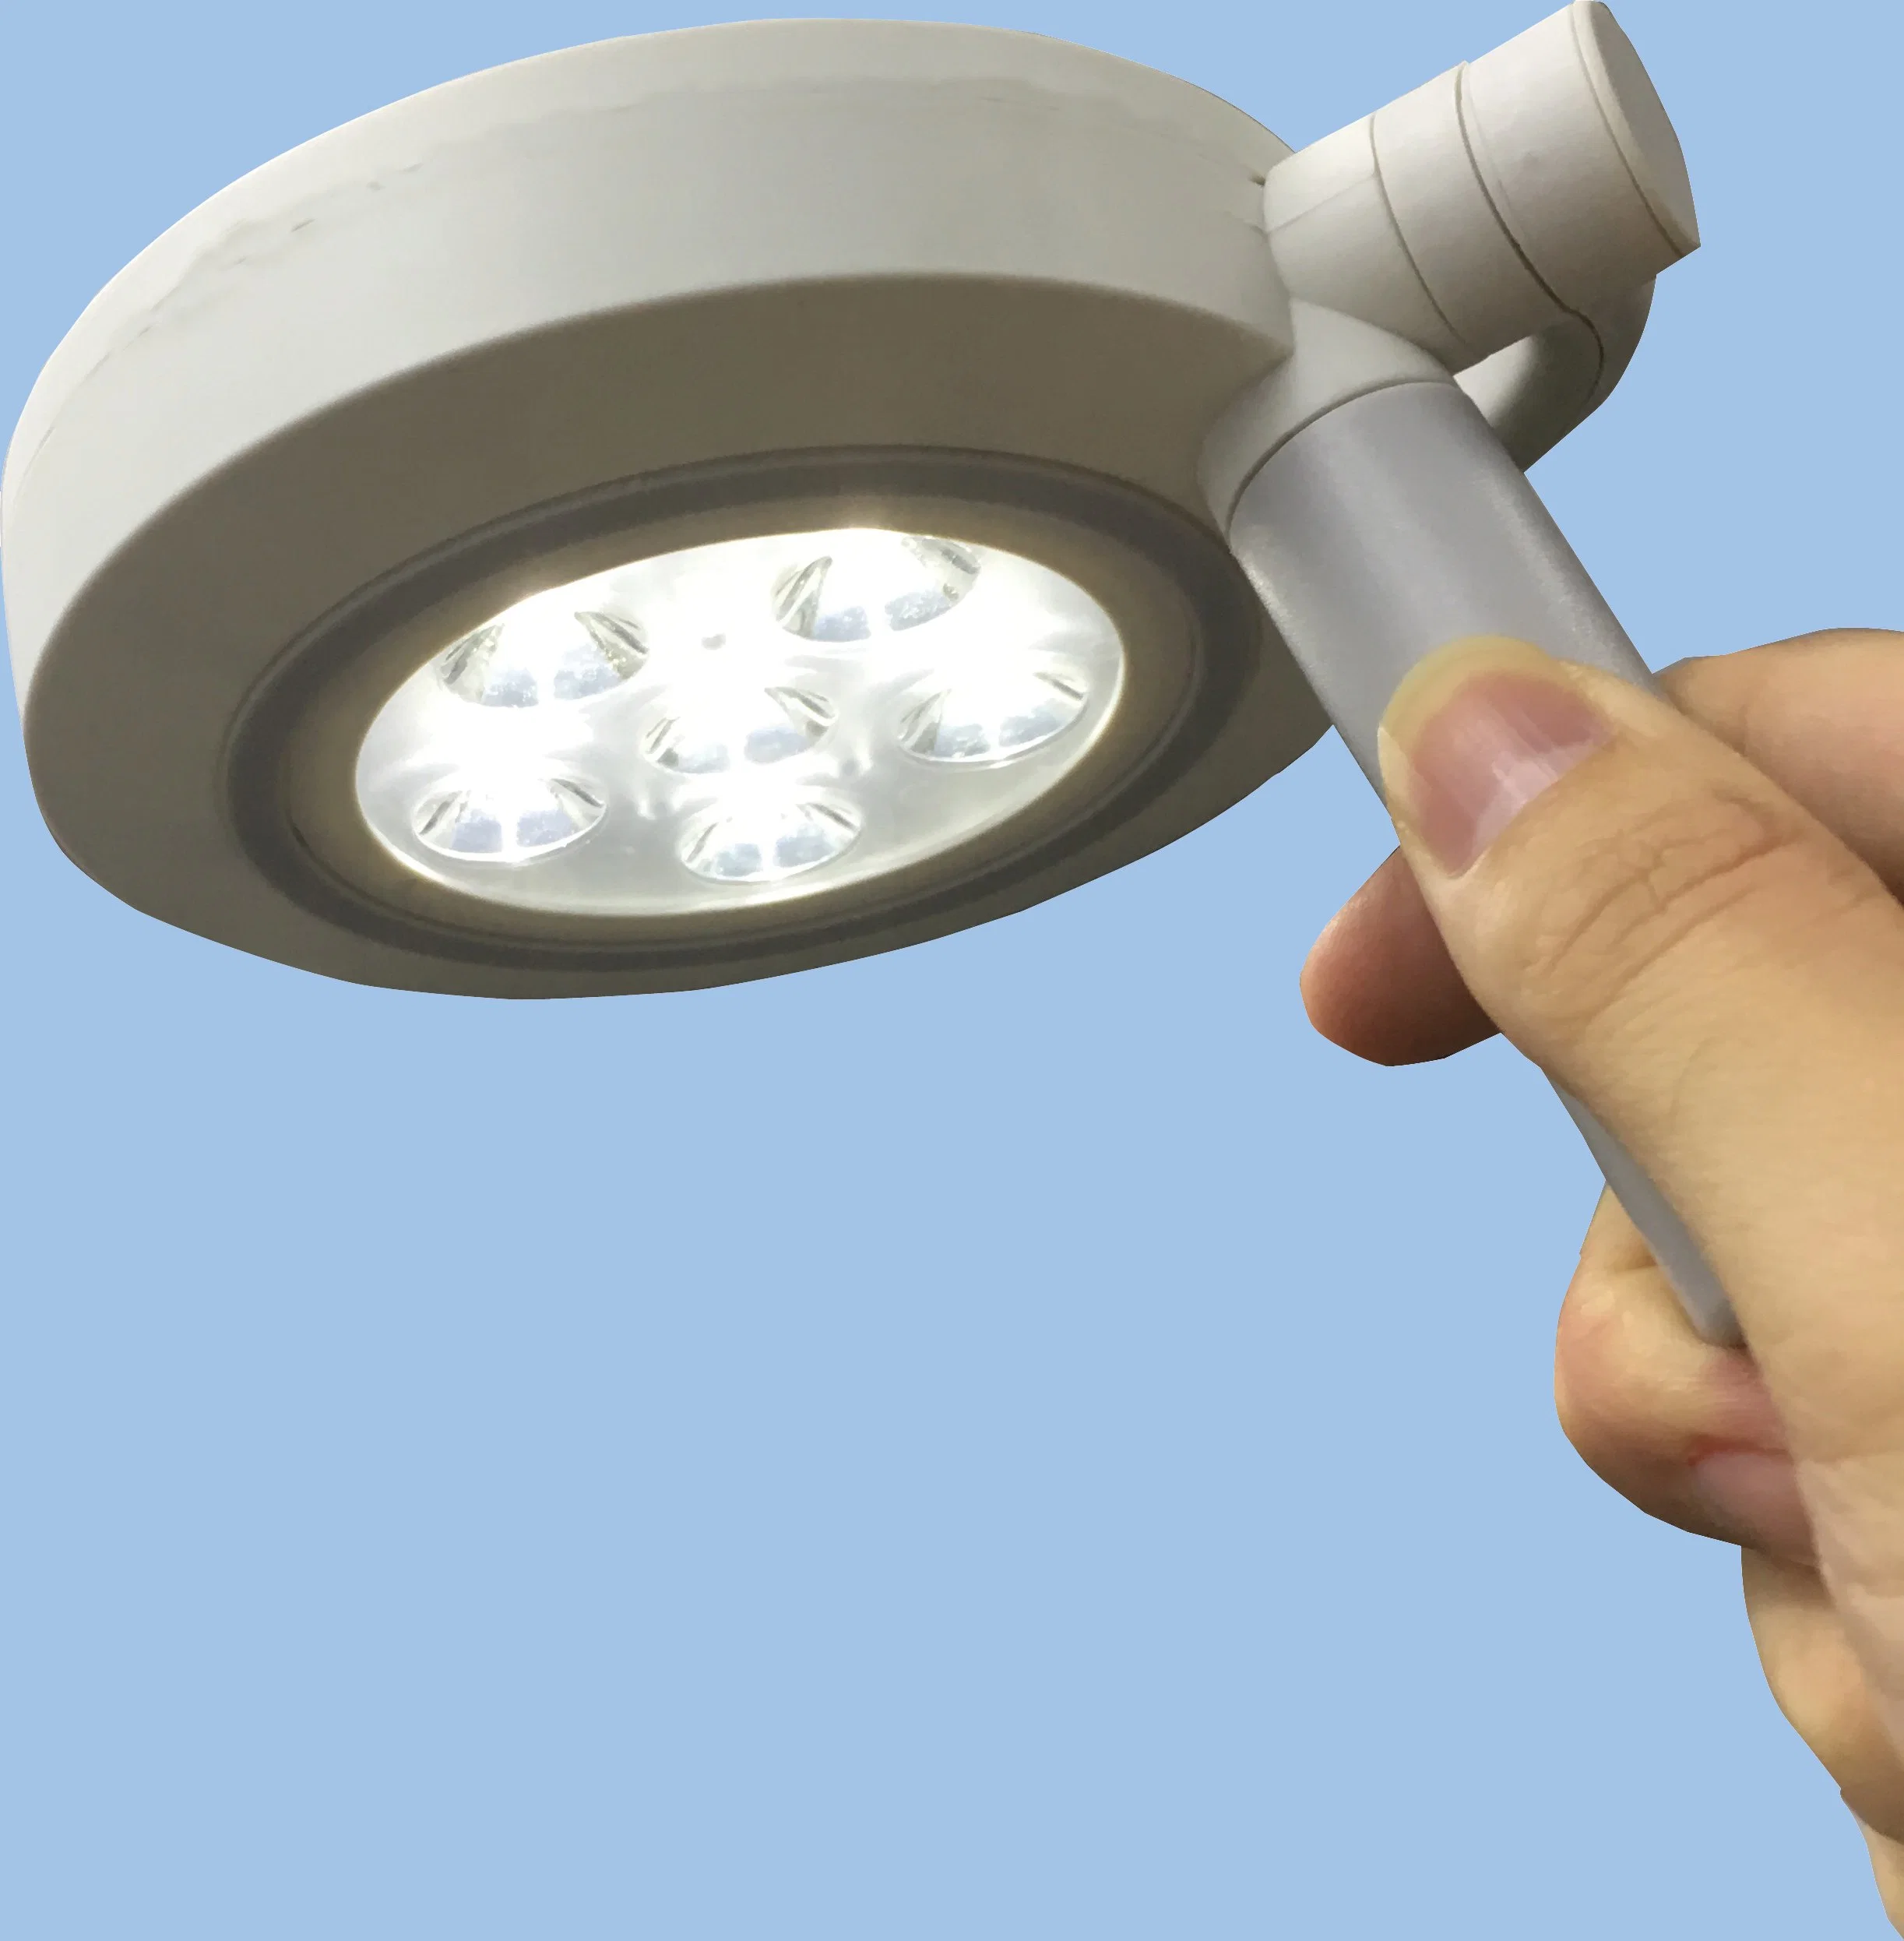 Minston-Ks-La-6s Mobile New Technology Touchless Brightness Control LED Surgical Light Hot Sales Model.